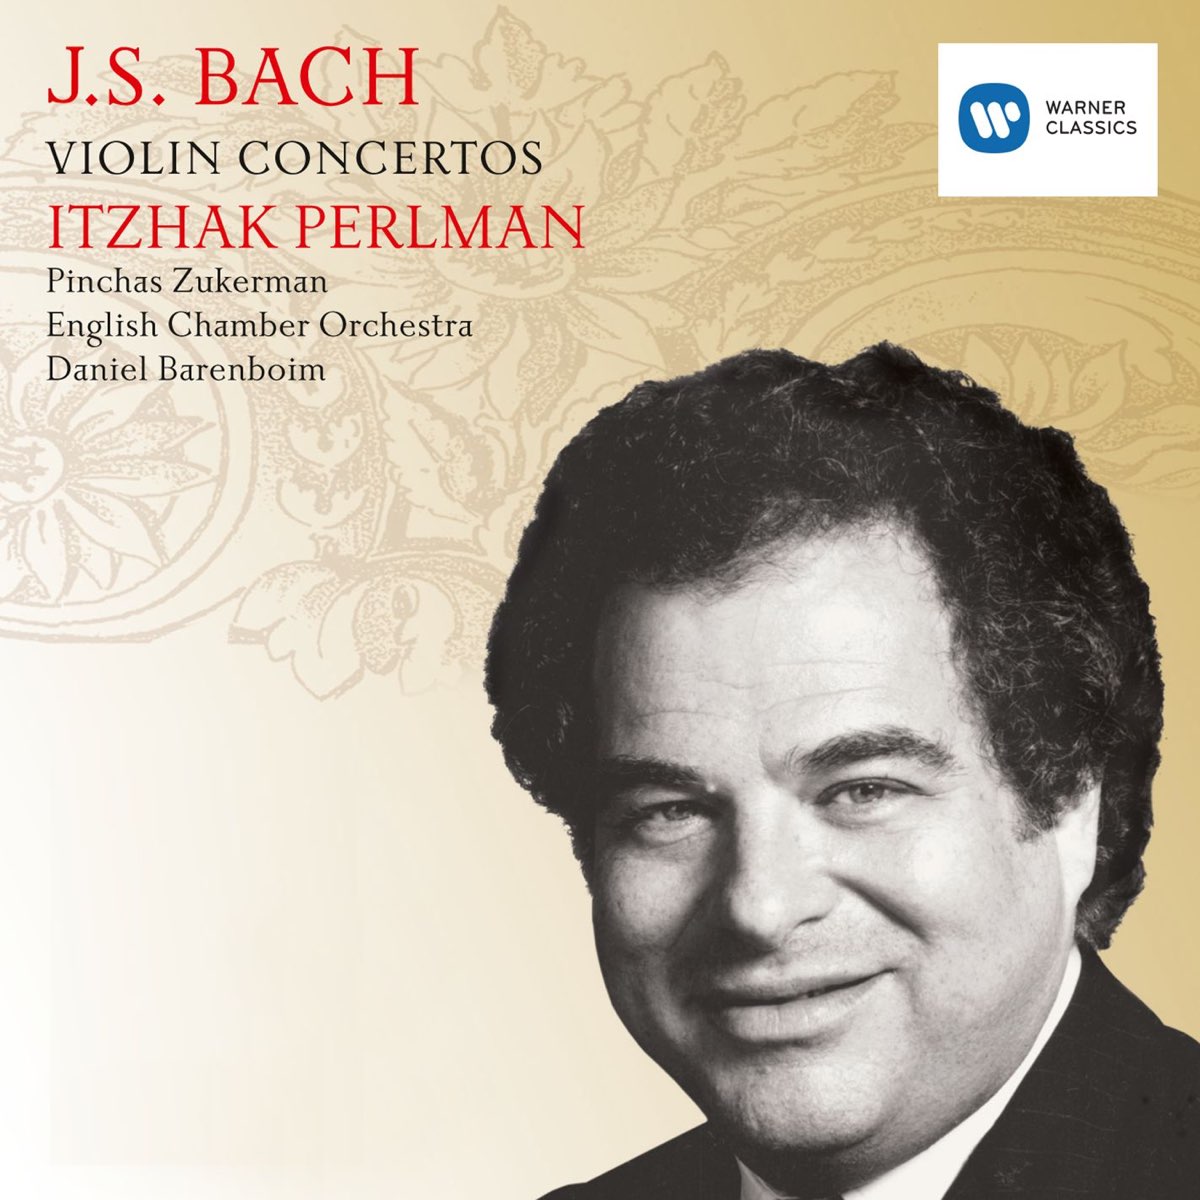 ‎bach Violin Concertos By Itzhak Perlman On Apple Music